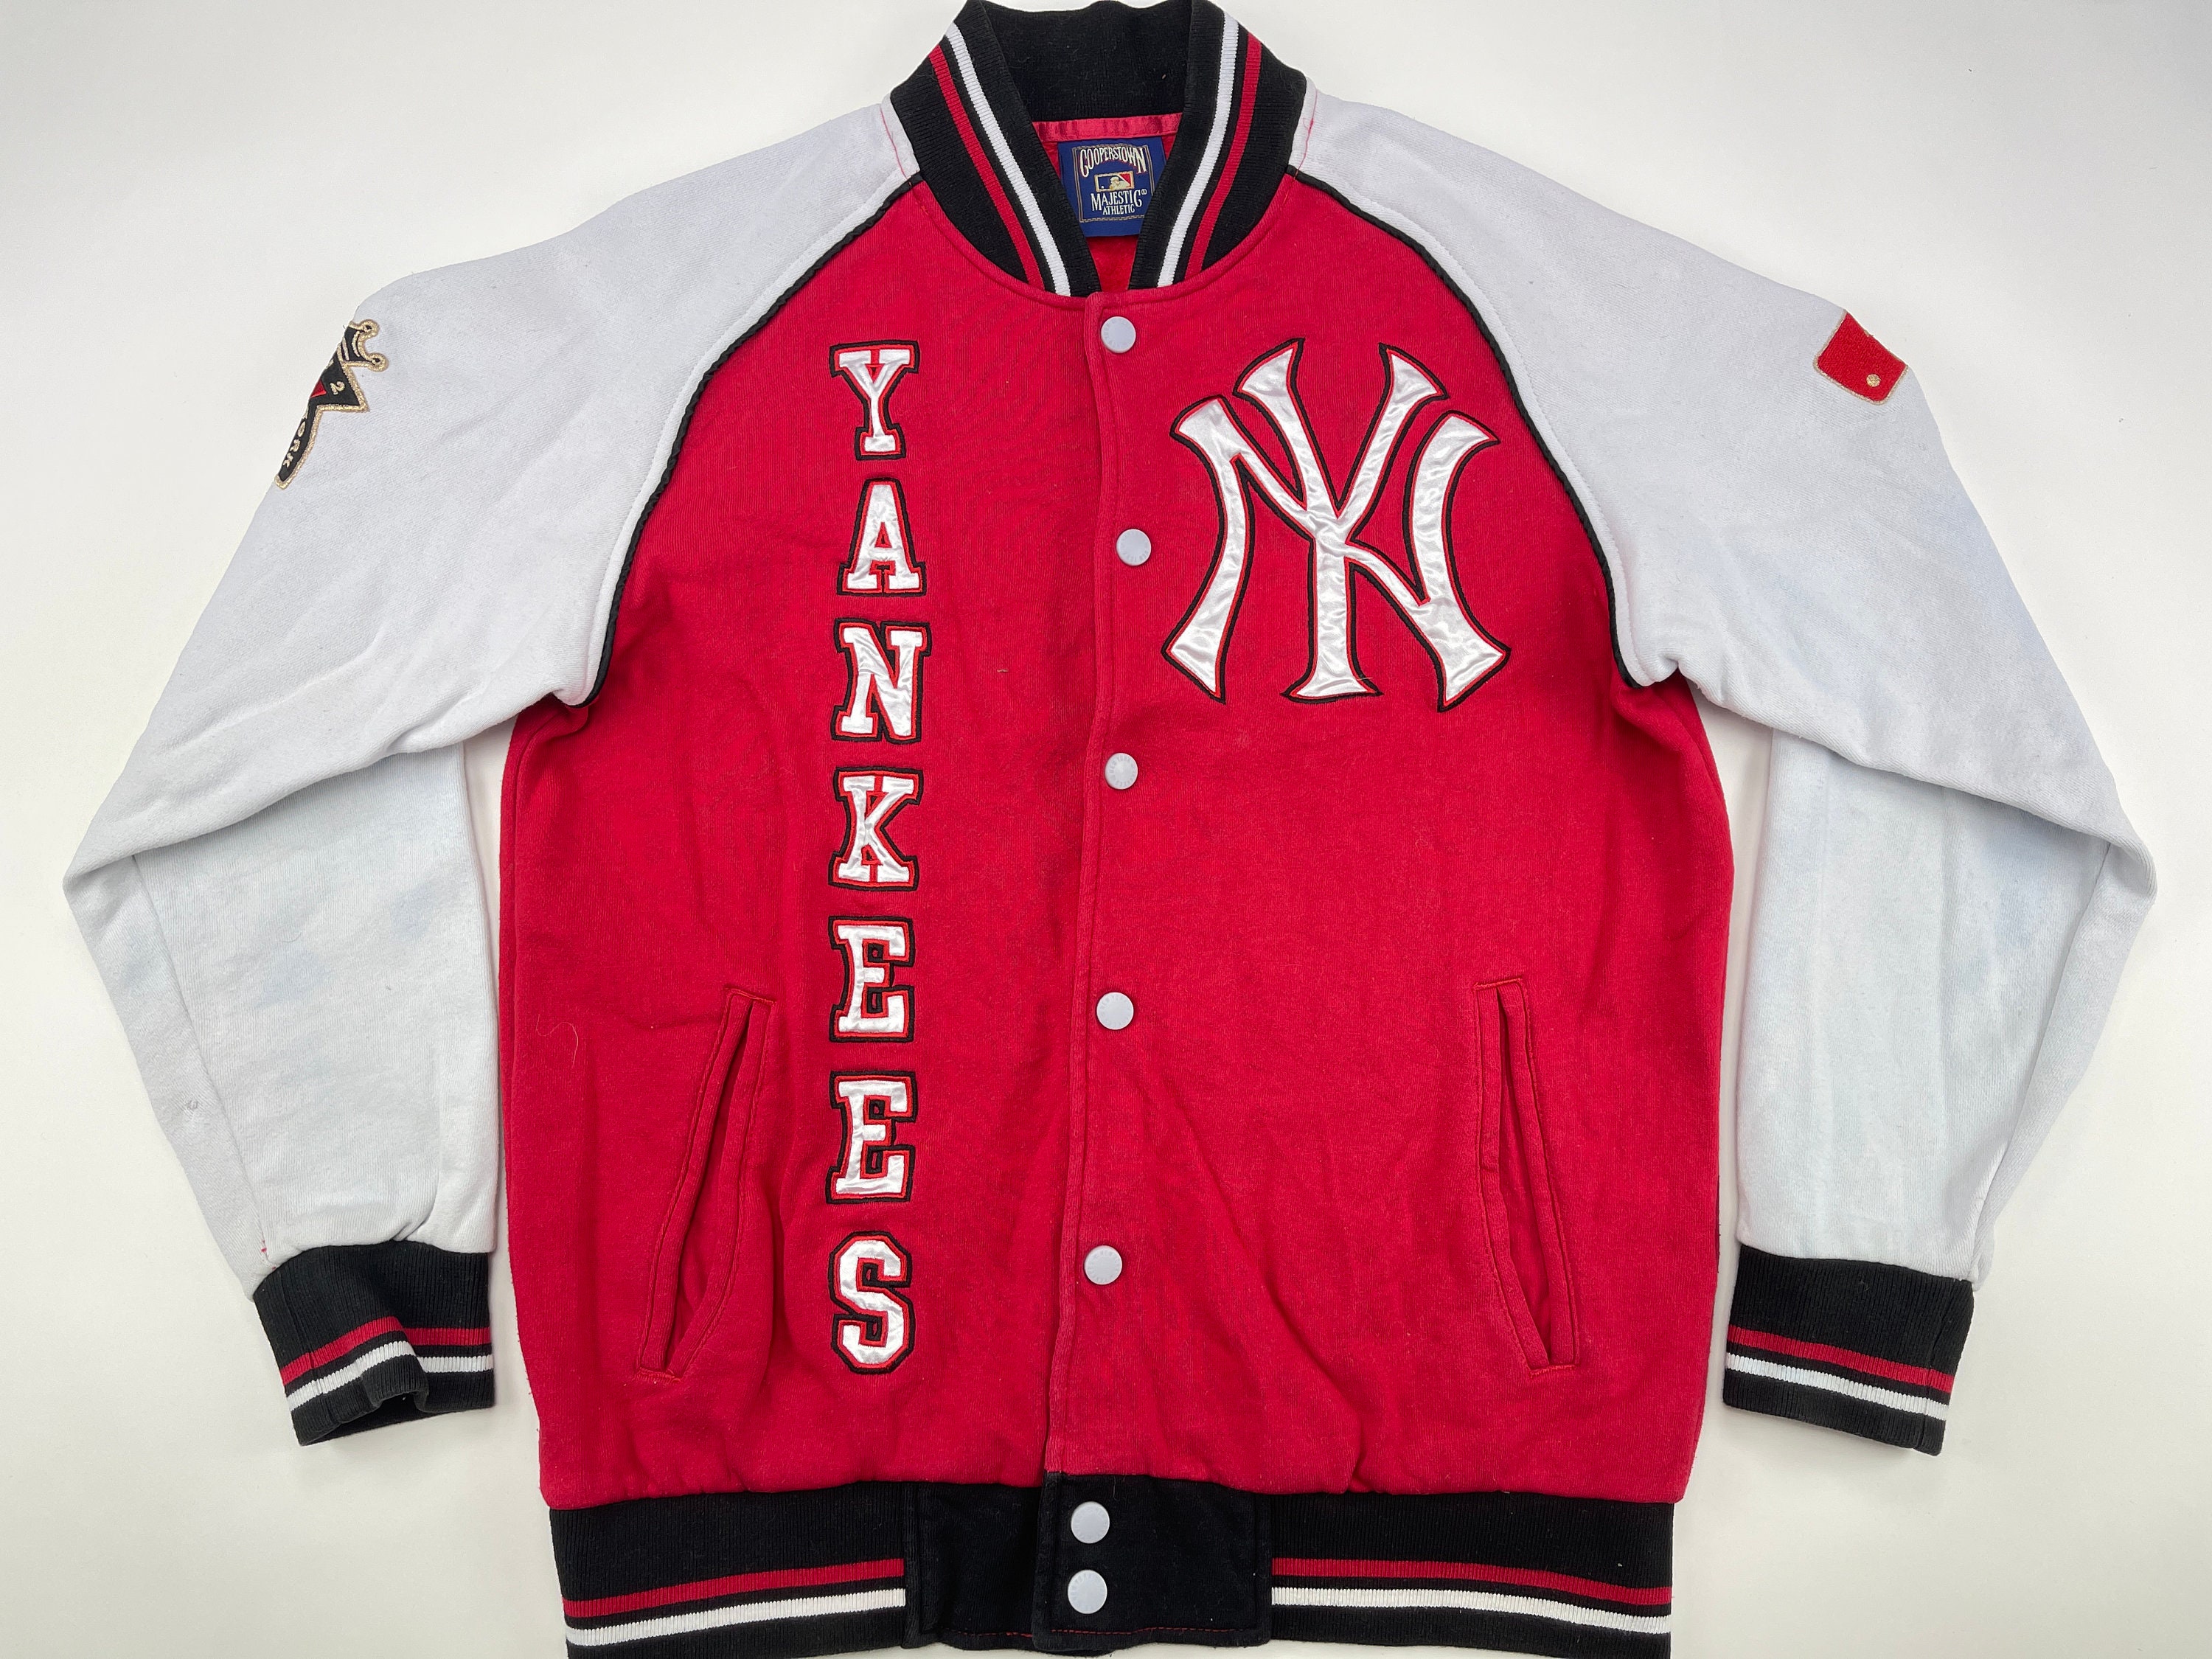 new york yankees jacket red